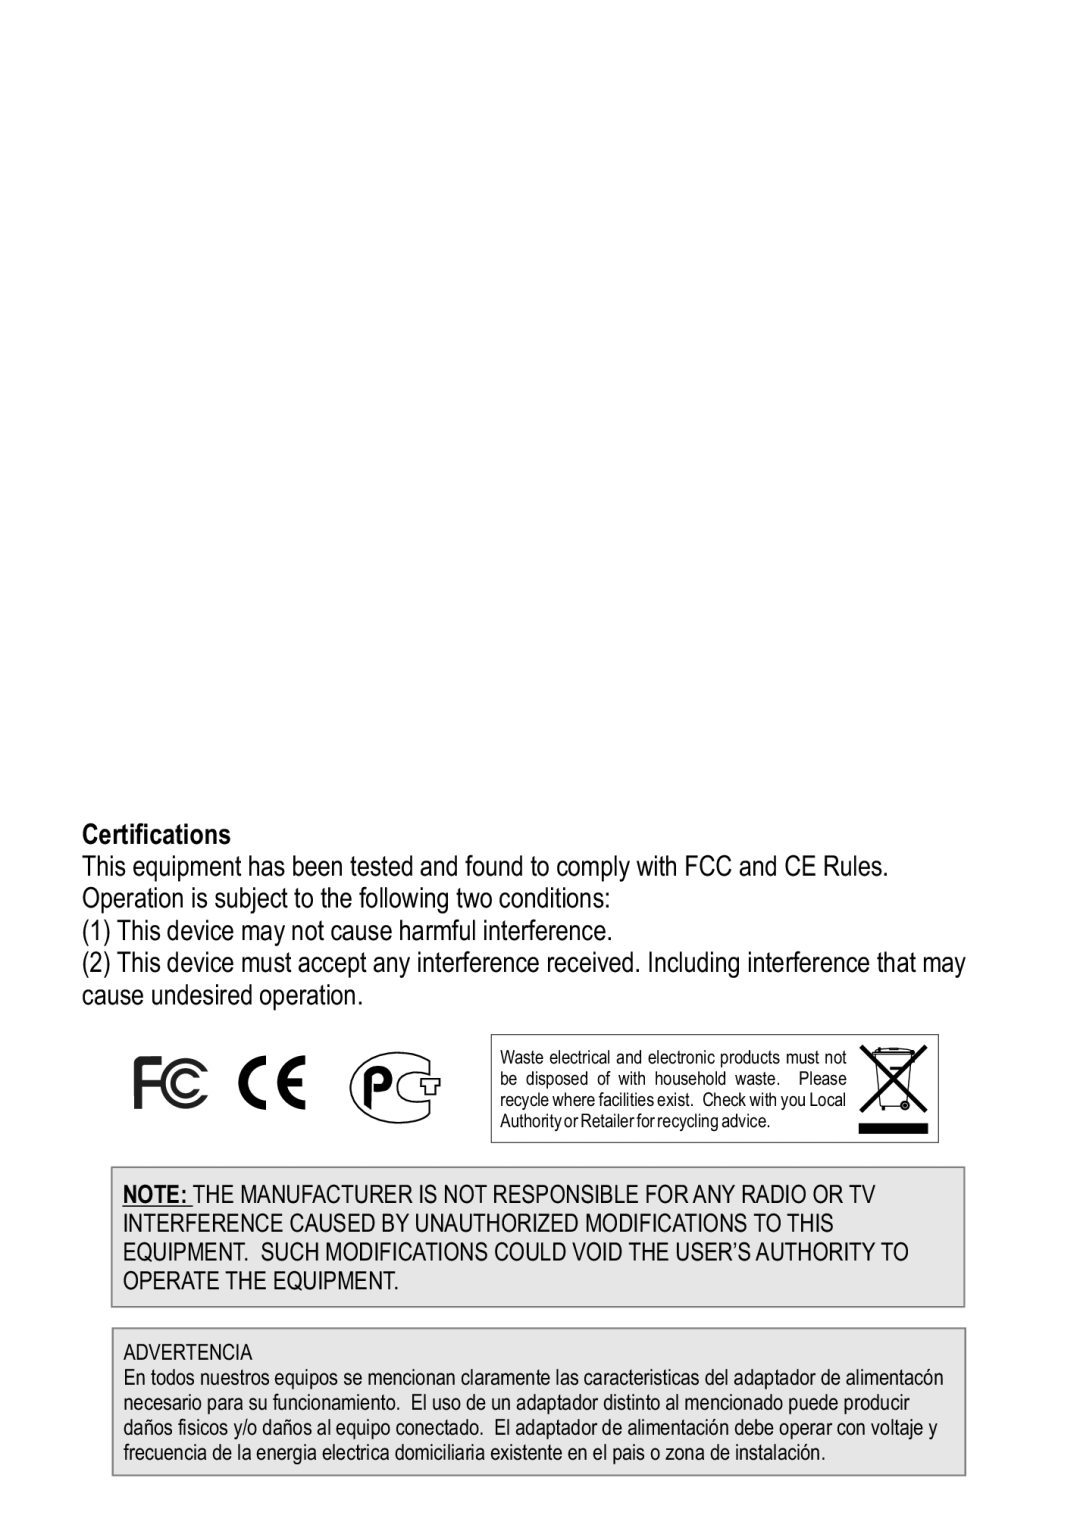 TRENDnet TRENDNET, TK-802R manual Certifications 